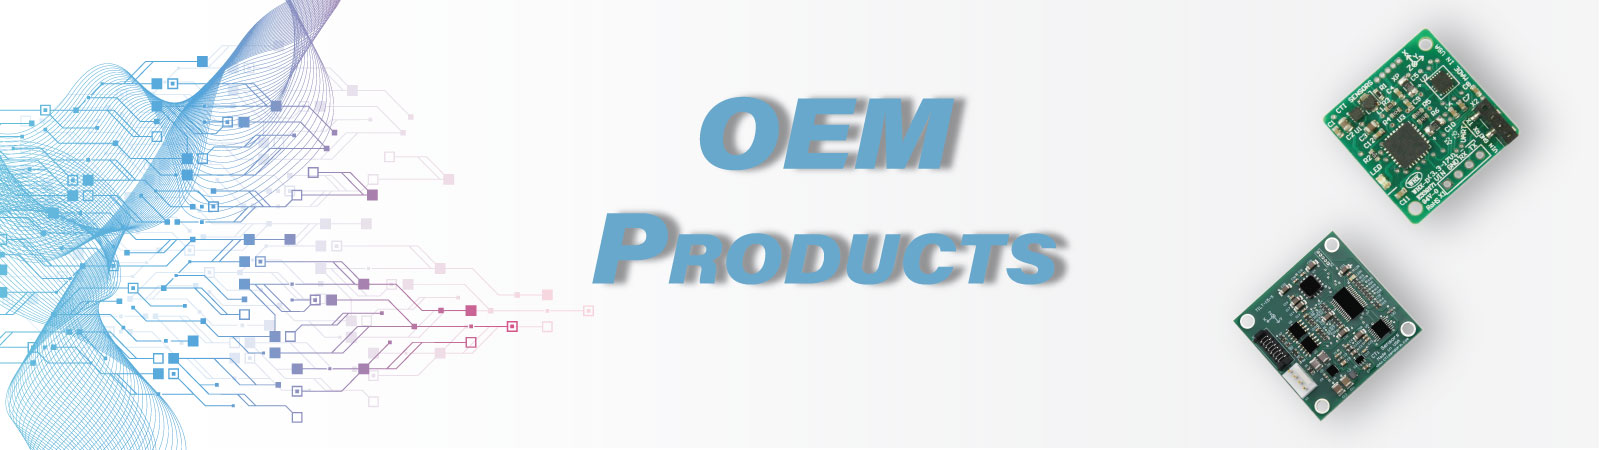 Products - OEM Tilt Sensors & Inclinometers